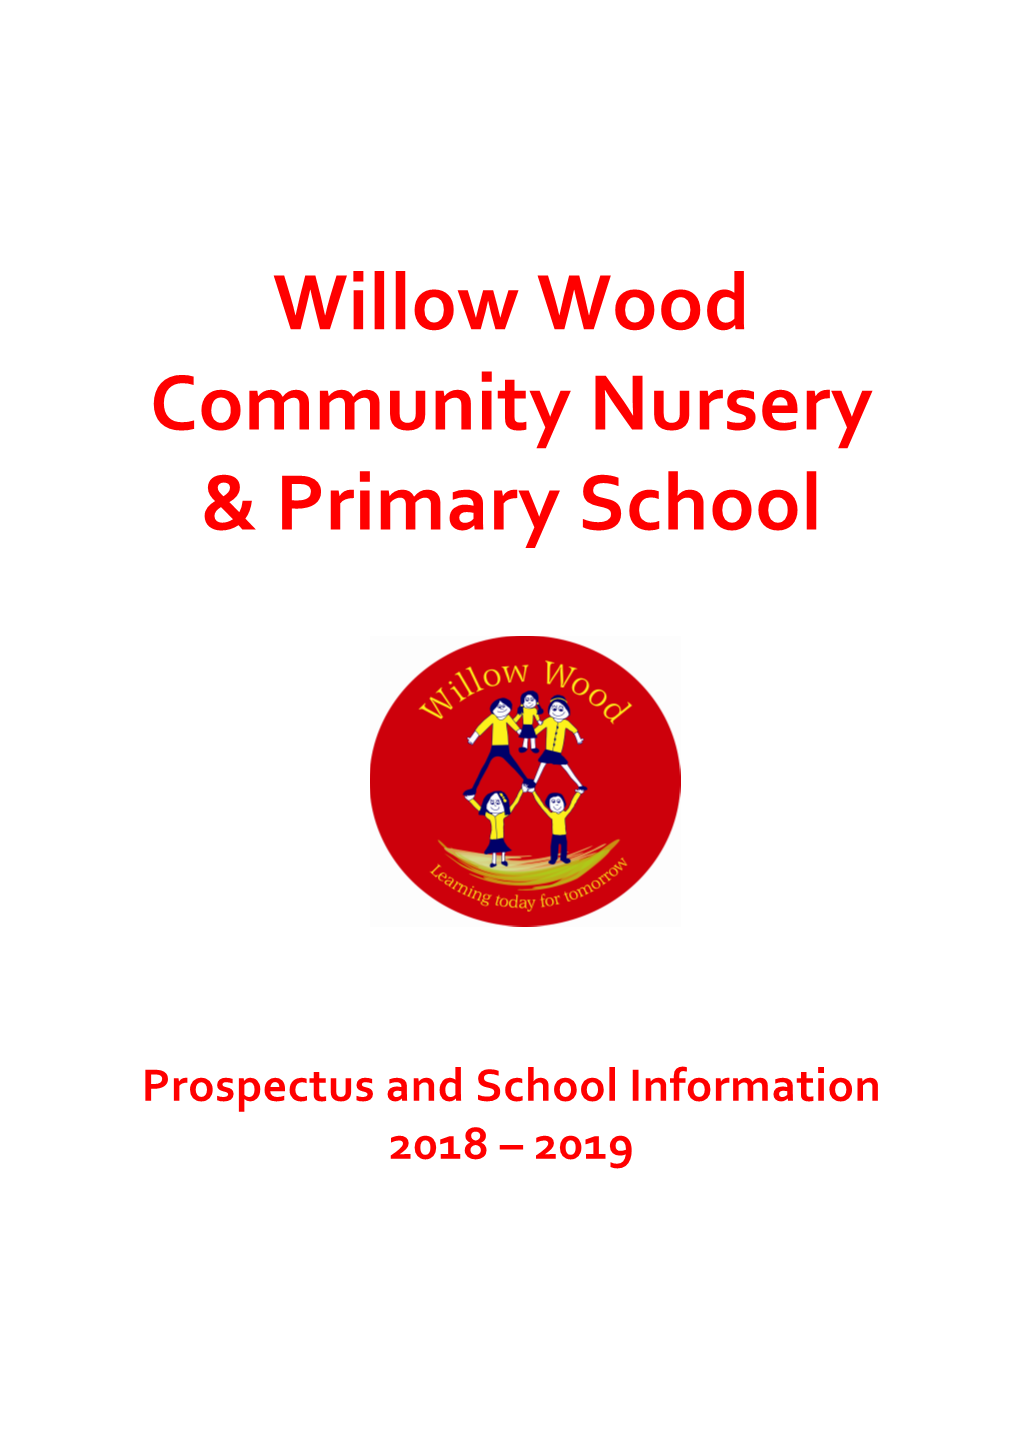 Willow Wood Community Nursery & Primary School